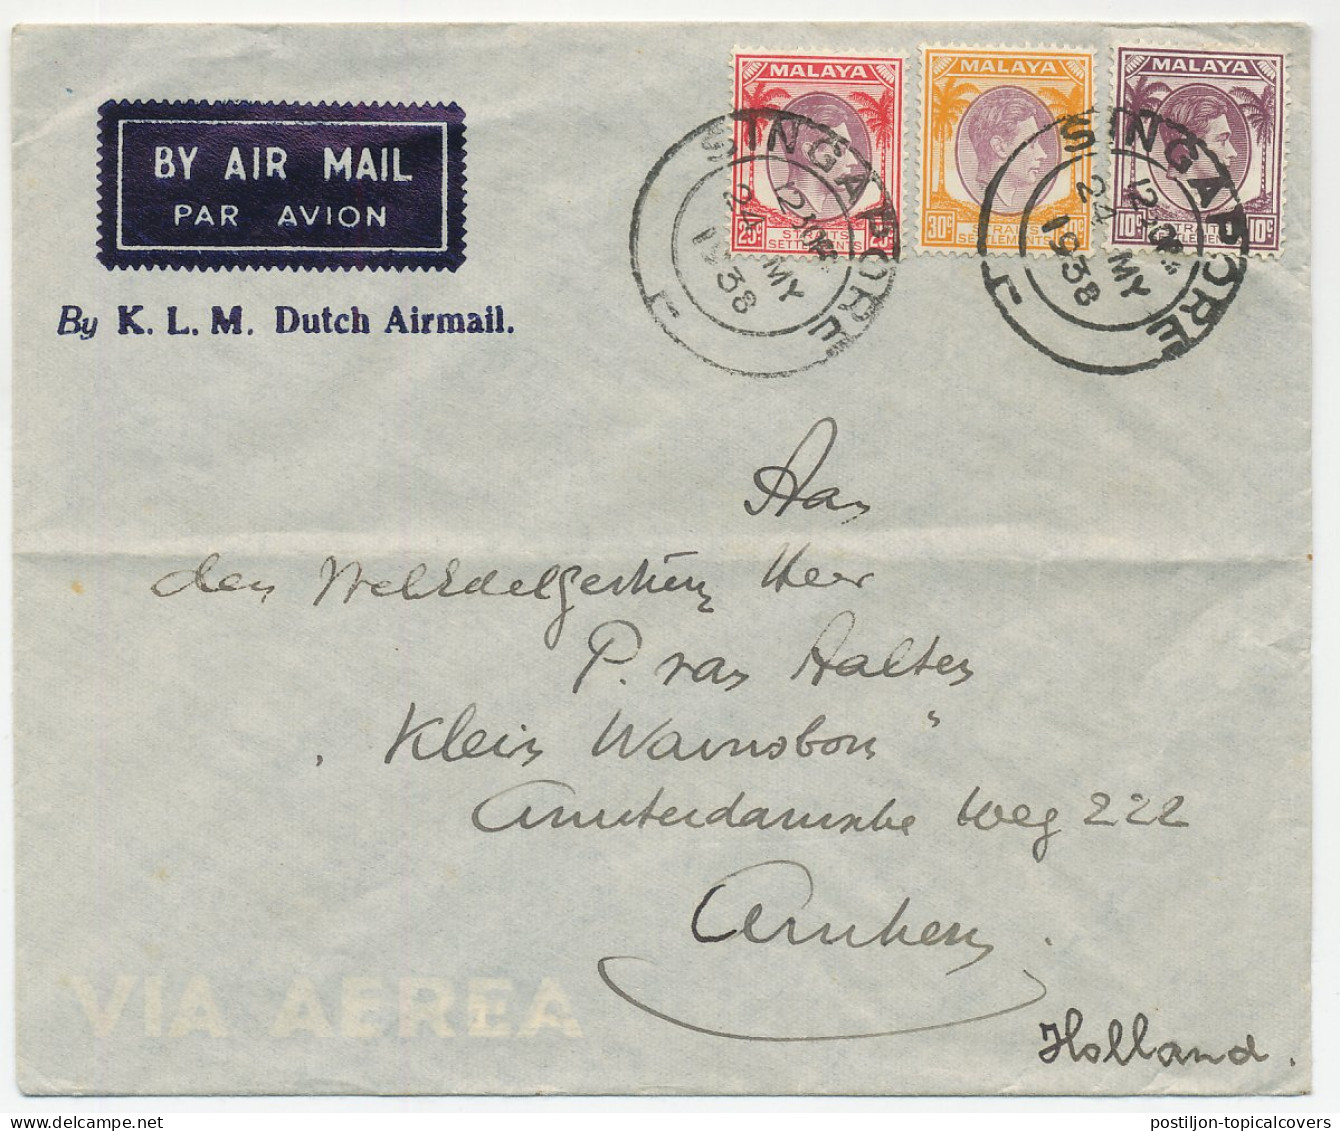  Cover / Postmark Singapore - Malaya - Netherlands 1938 By-KLM-Dutch-Airmail  - Avions